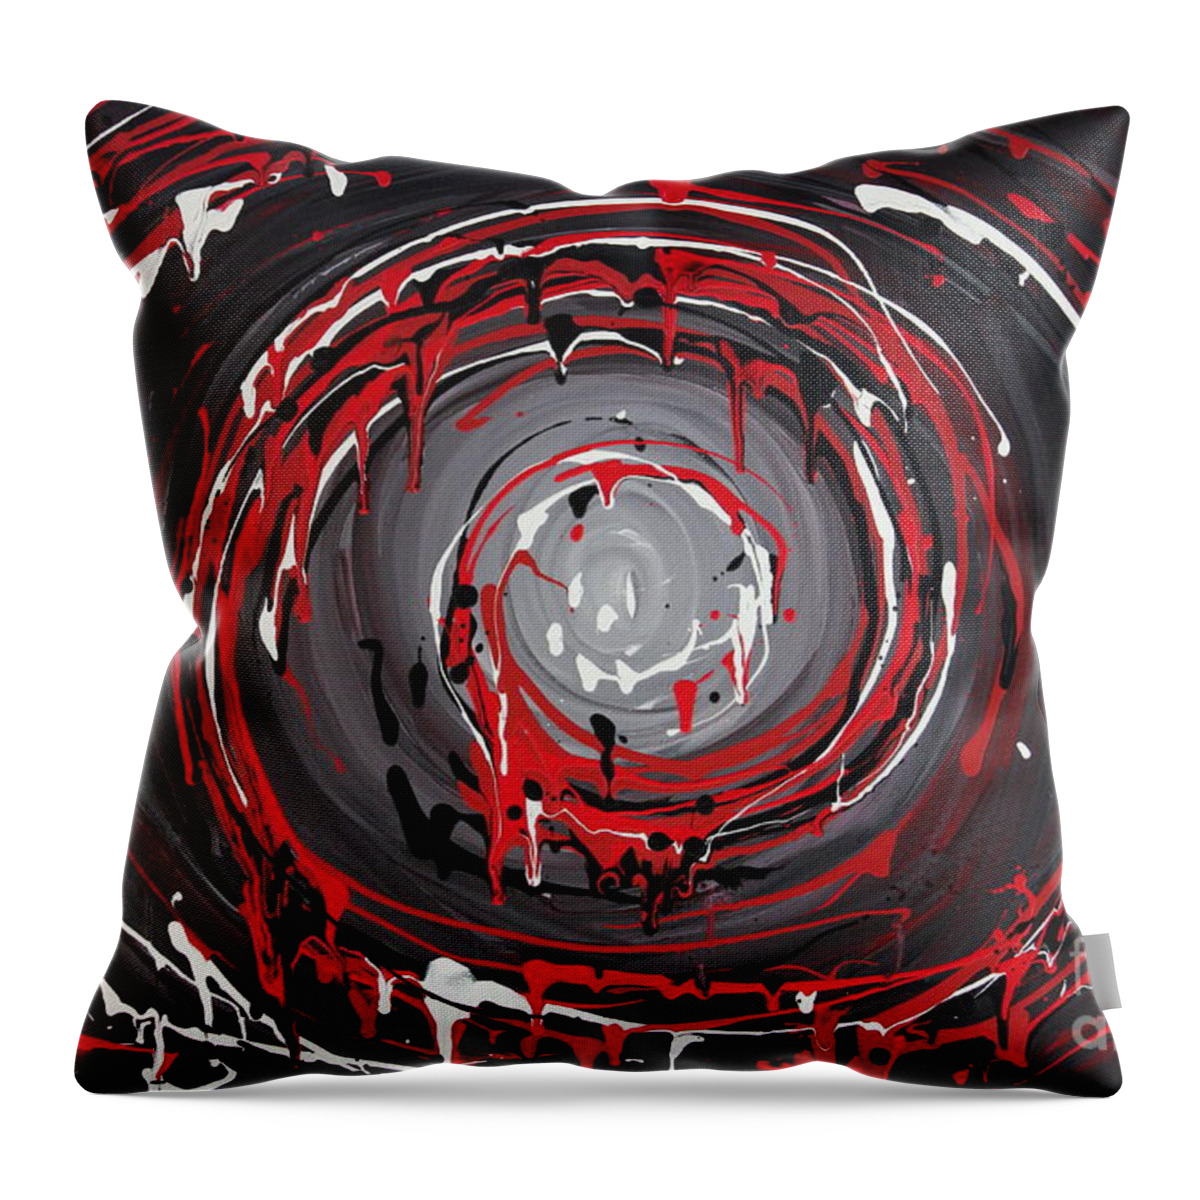 Swirl Throw Pillow featuring the painting Raspberry swirls by Preethi Mathialagan